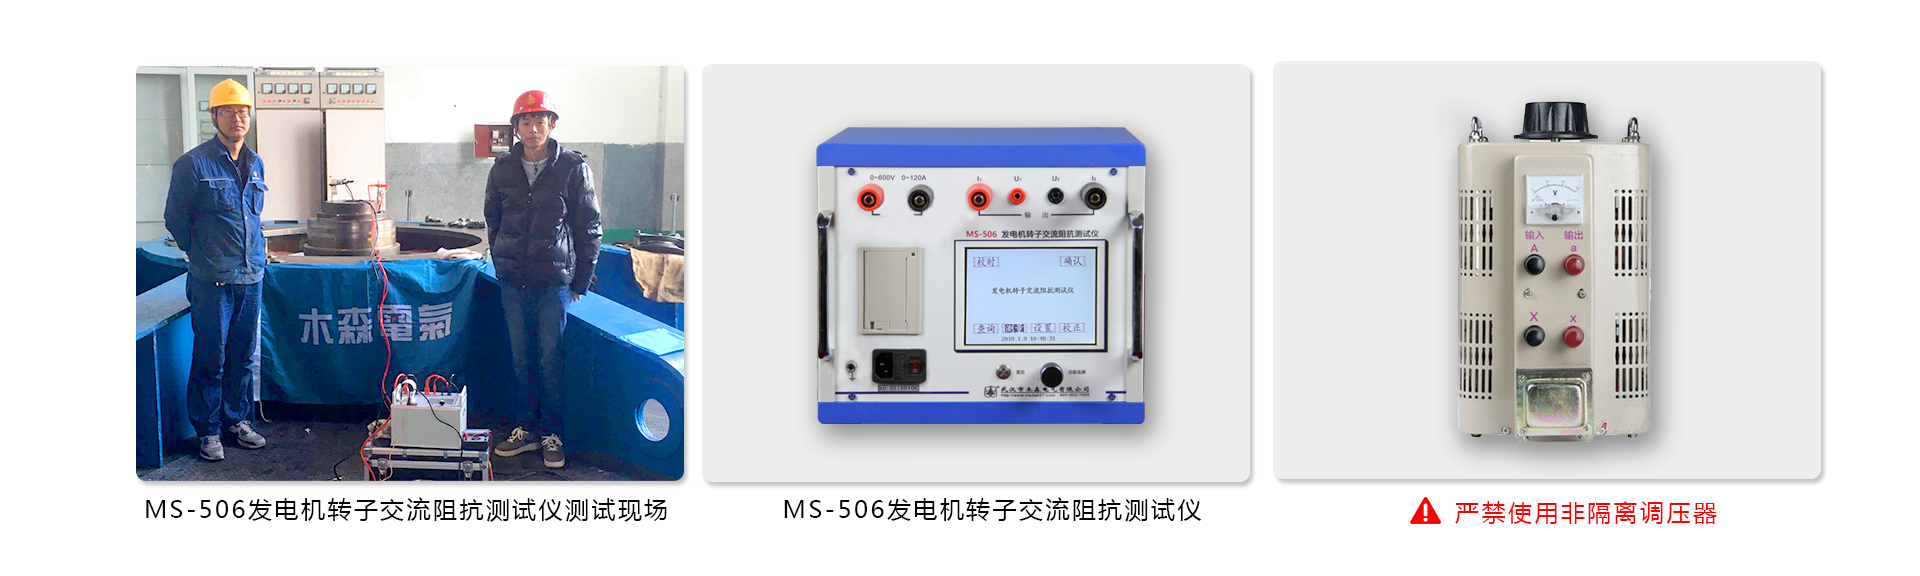 MS-506A发电机转子交流阻抗测试仪